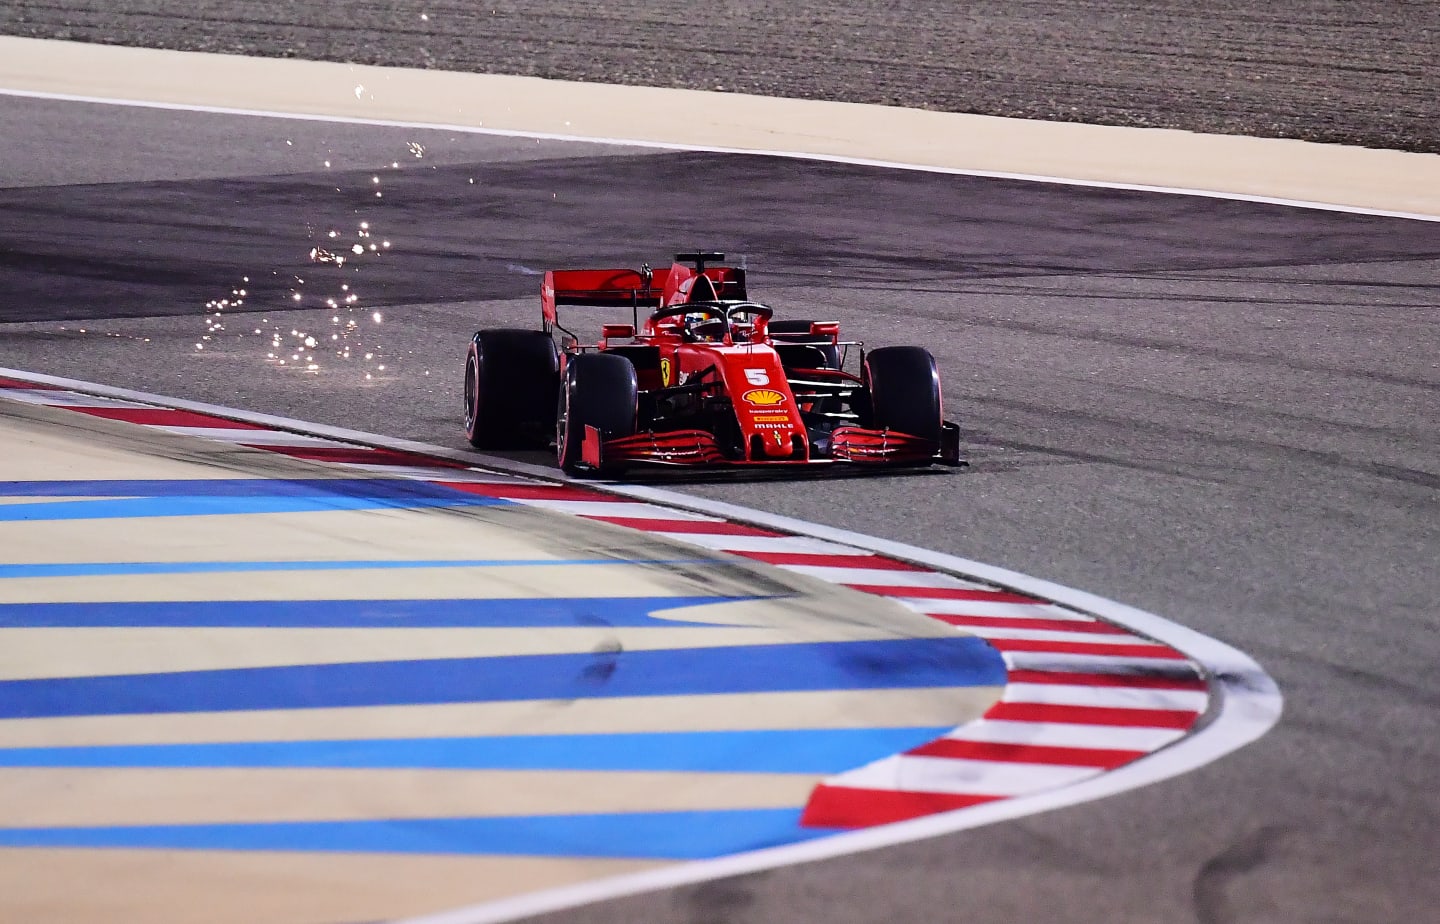 BAHRAIN, BAHRAIN - DECEMBER 05: Sebastian Vettel of Germany driving the (5) Scuderia Ferrari SF1000 on track during qualifying ahead of the F1 Grand Prix of Sakhir at Bahrain International Circuit on December 05, 2020 in Bahrain, Bahrain. (Photo by Giuseppe Cacace - Pool/Getty Images)